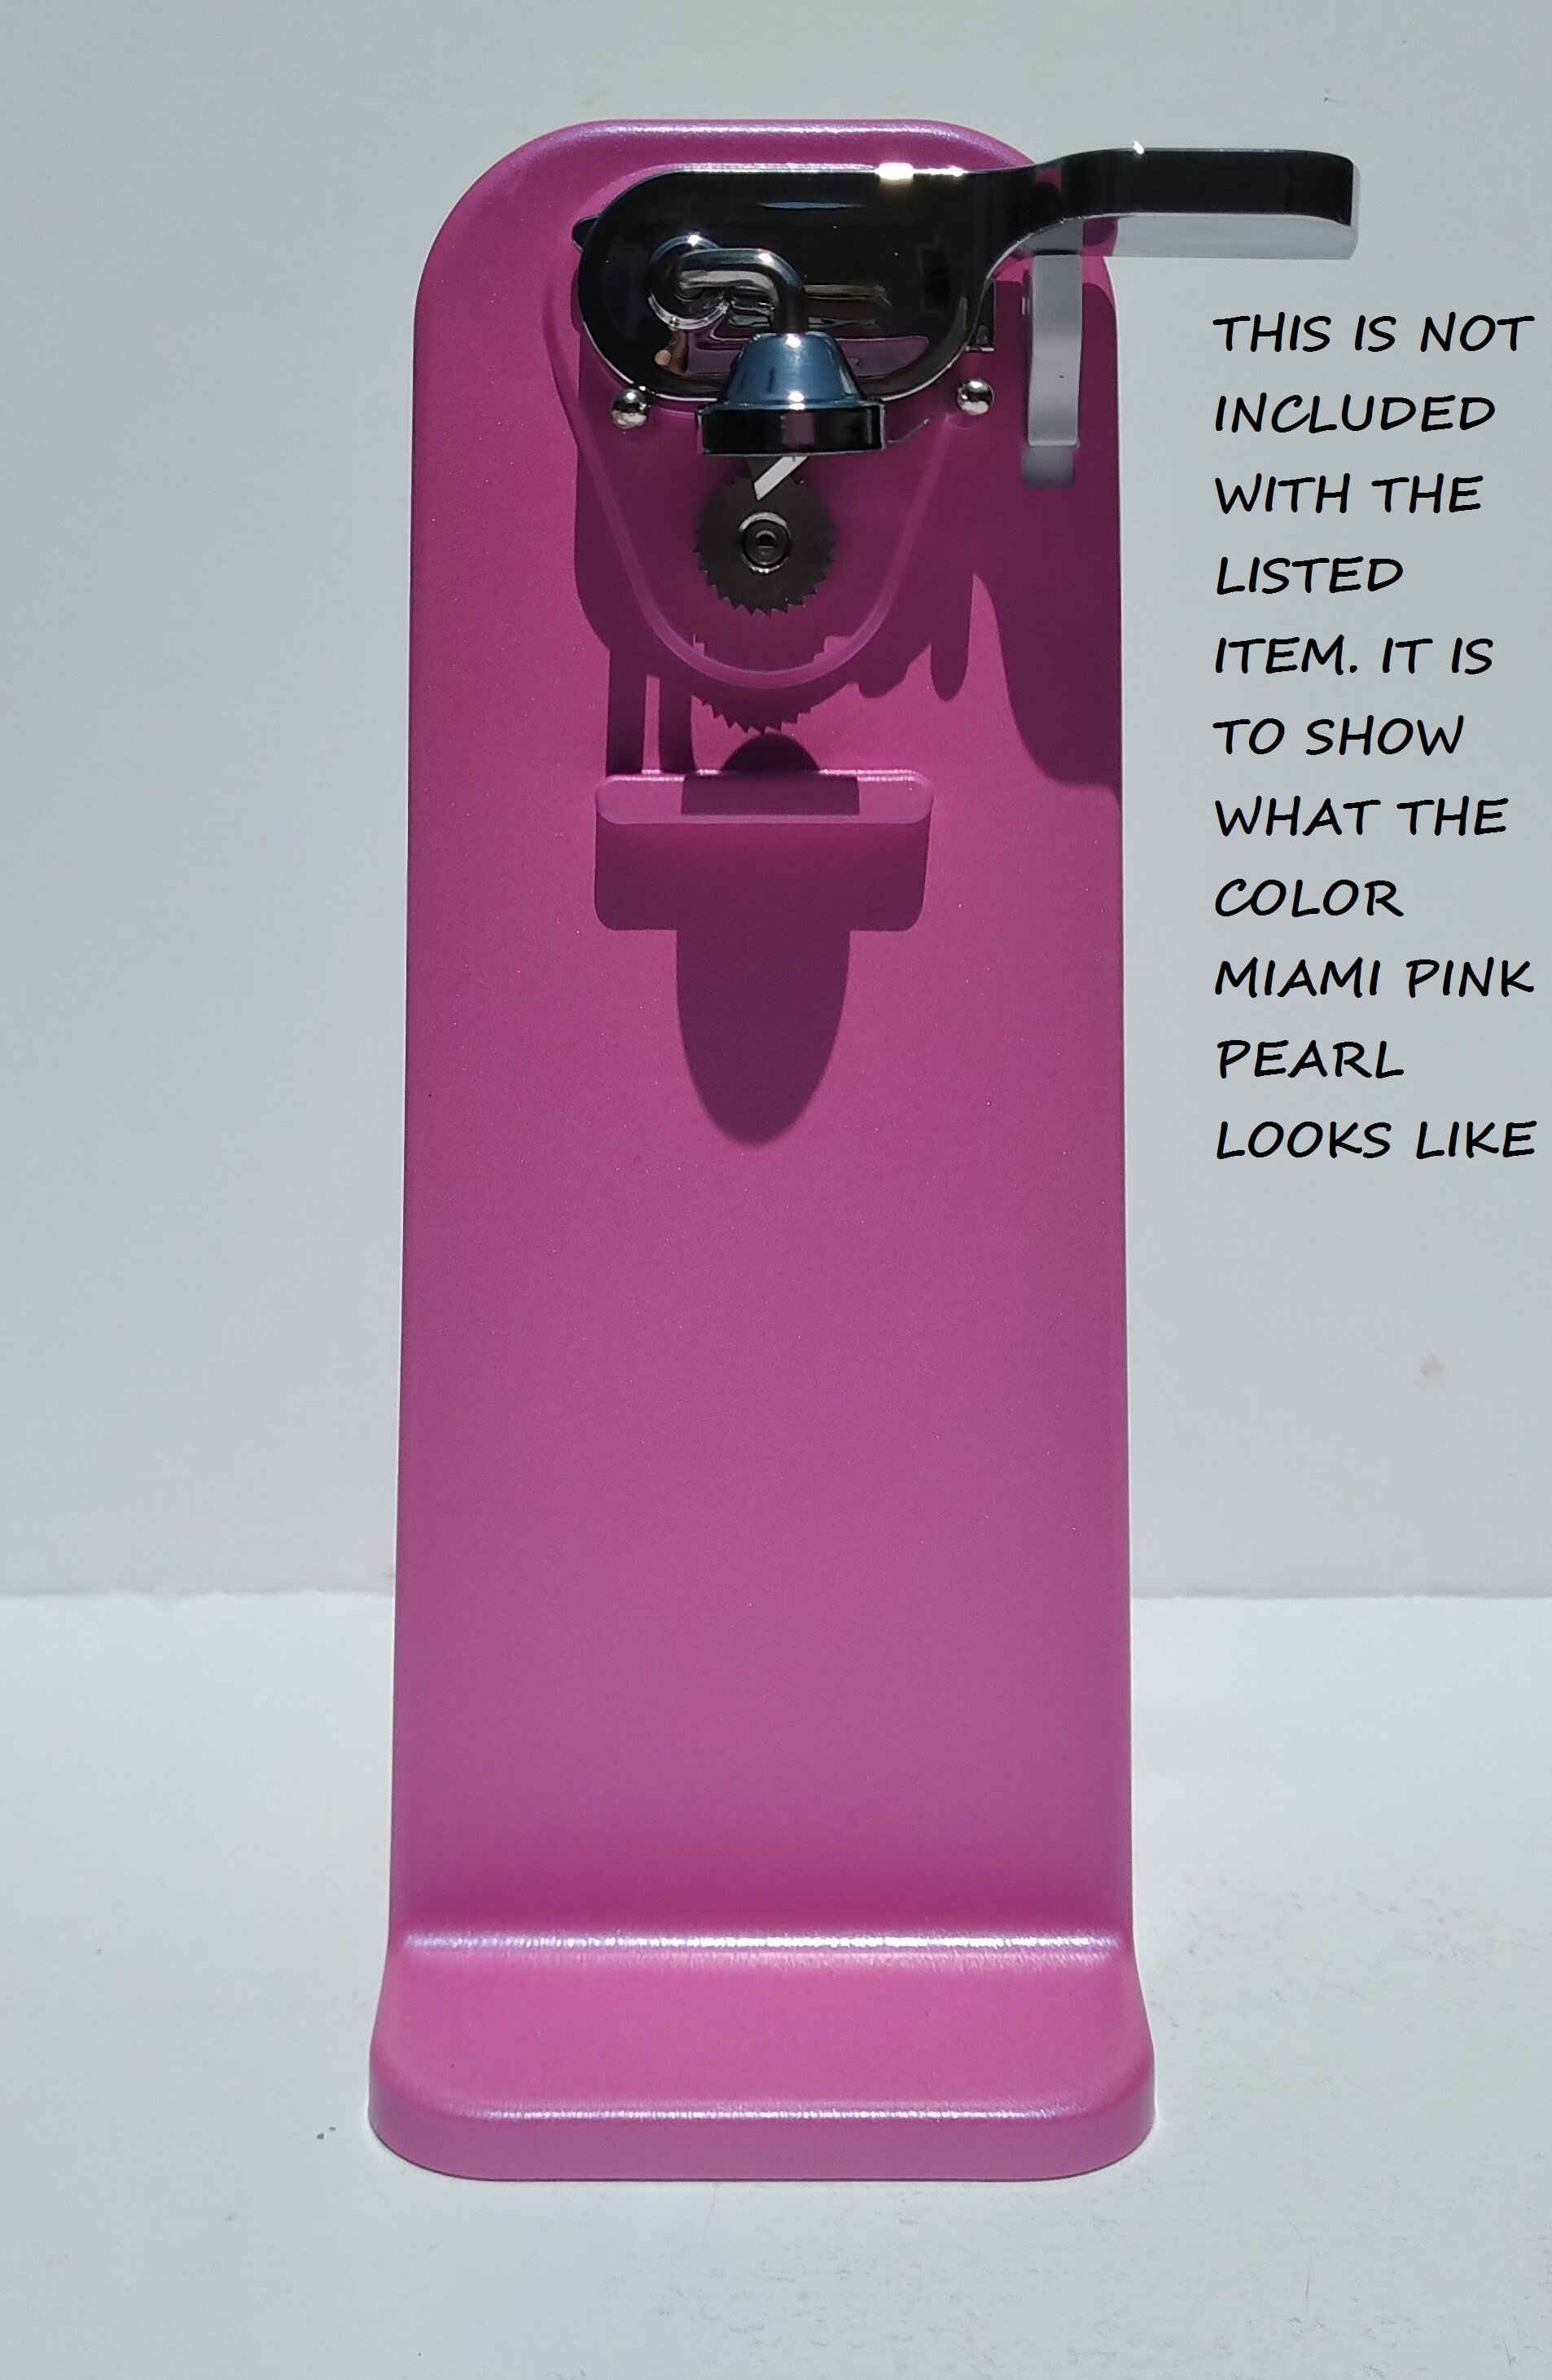 casapinka: Pink can opener